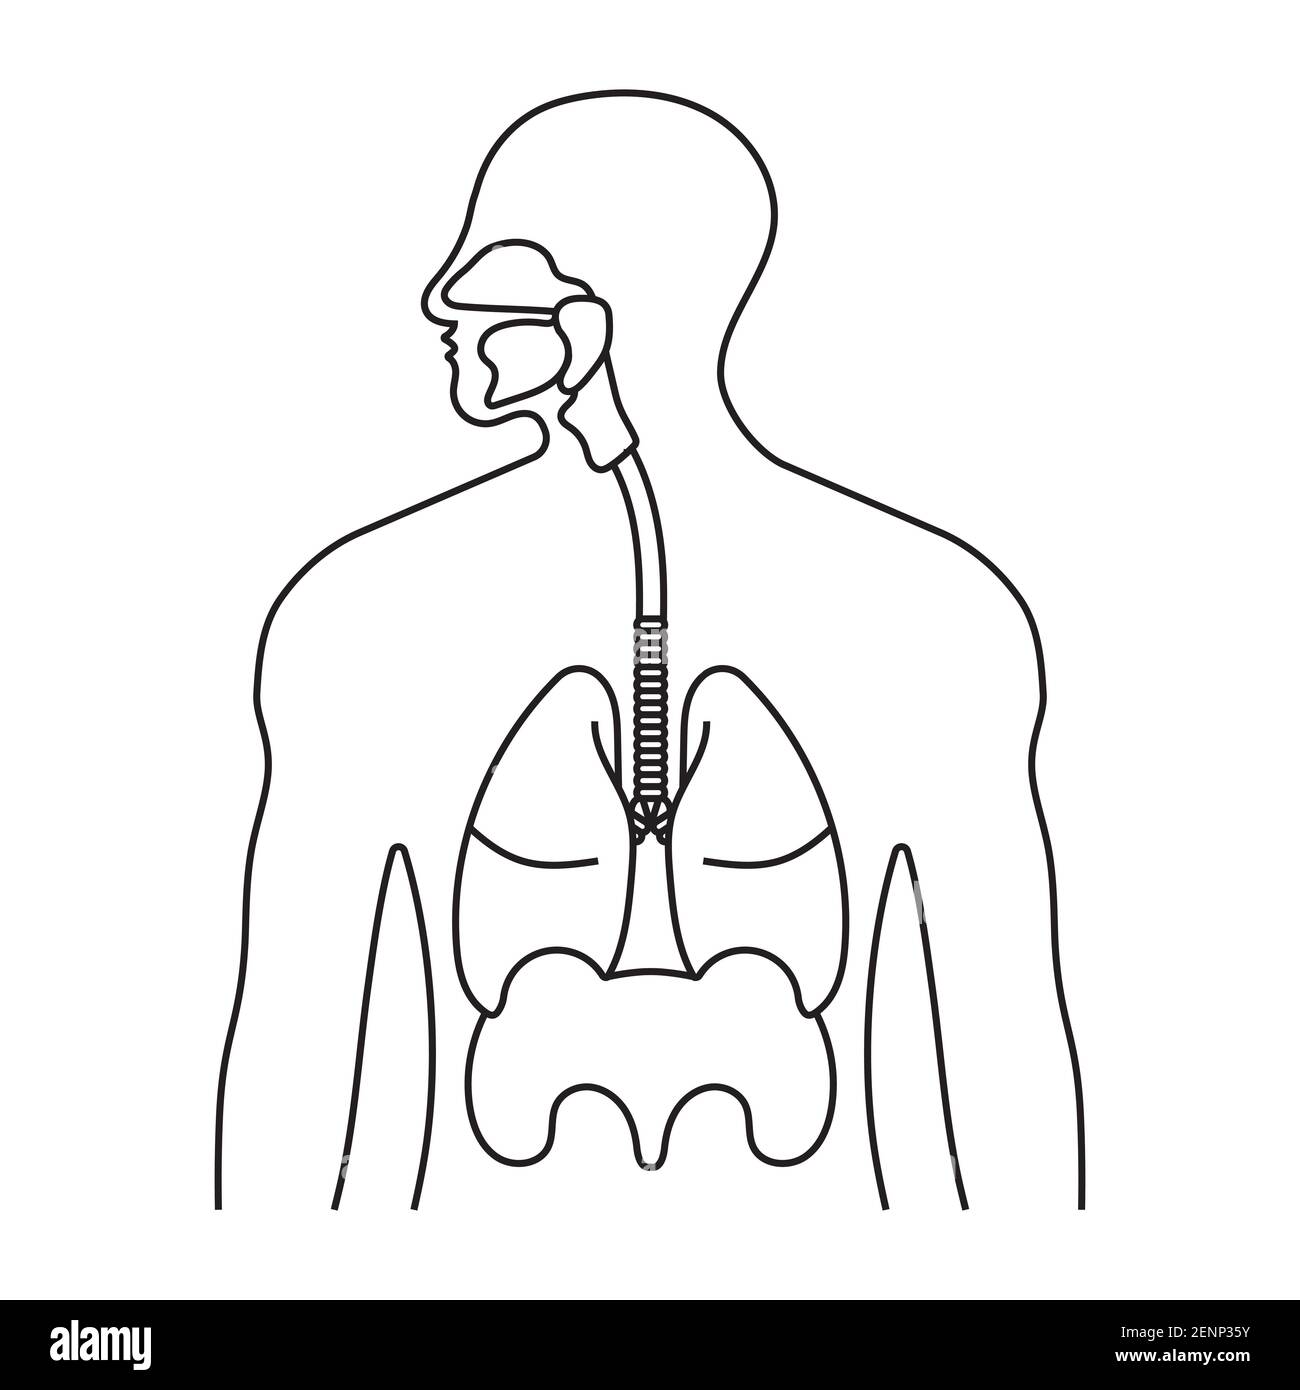 Respiratory system #15